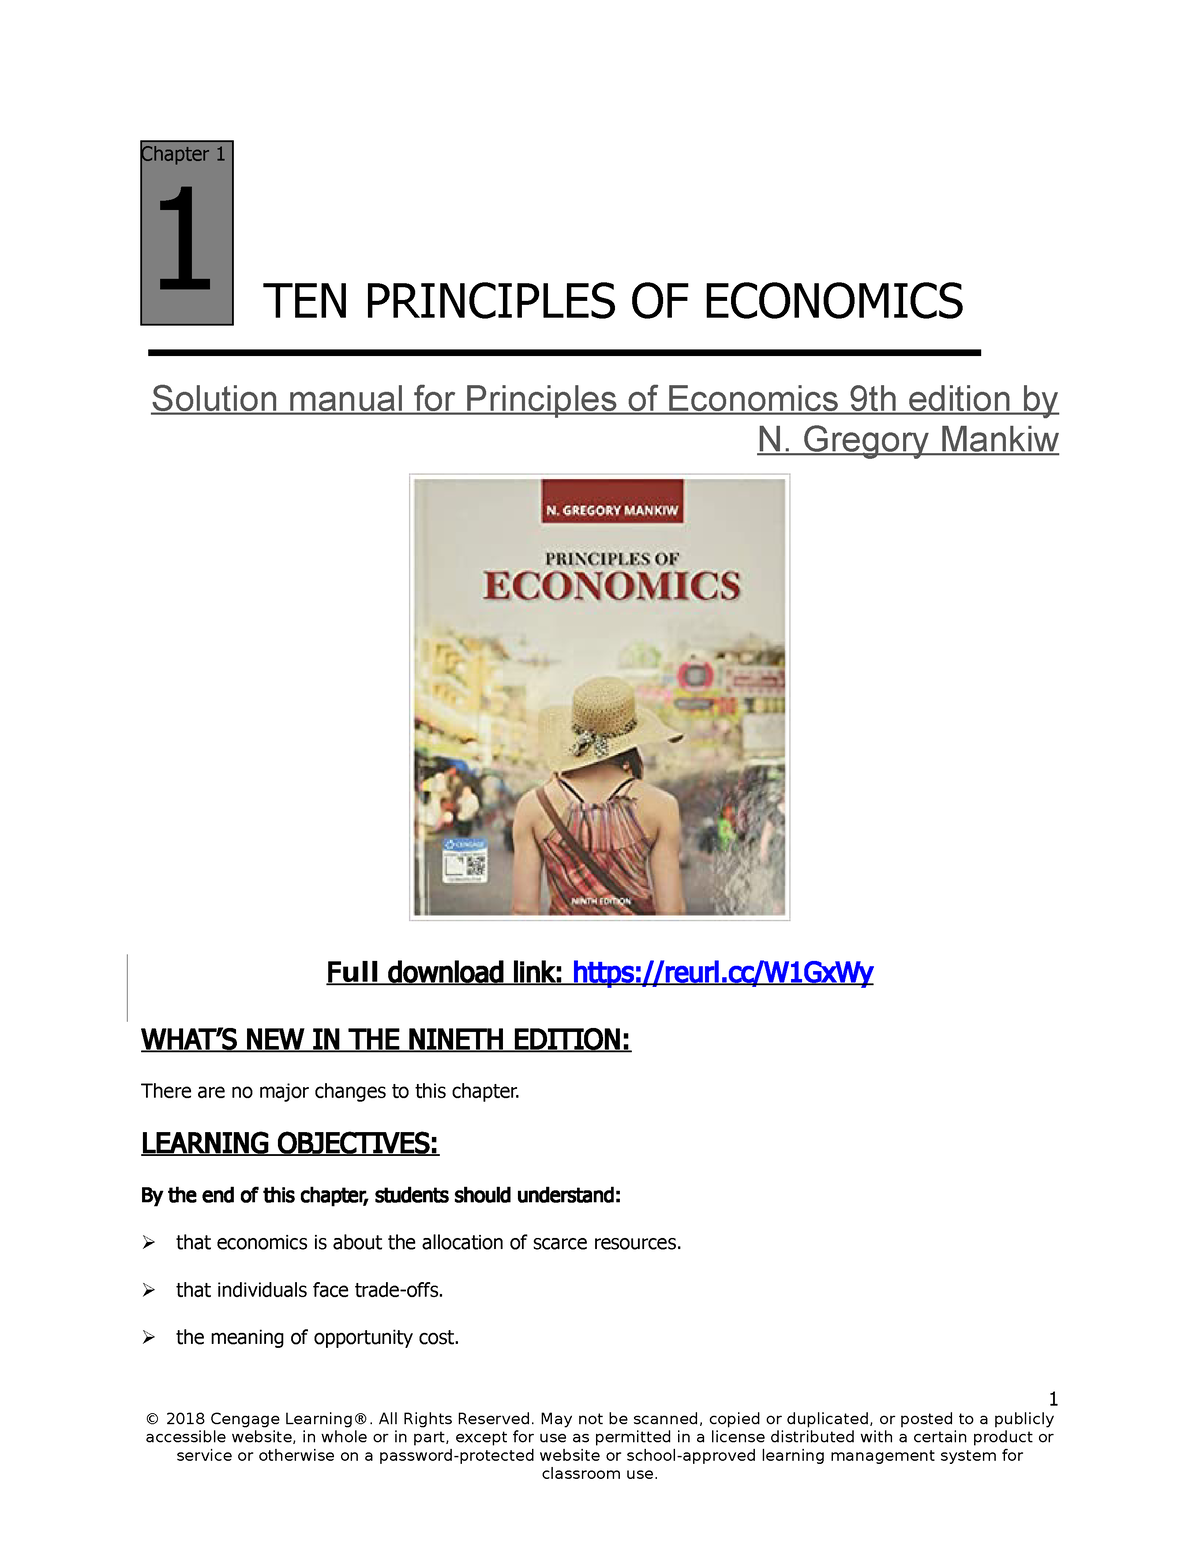 mankiw macroeconomics 9th edition solutions manual pdf free download